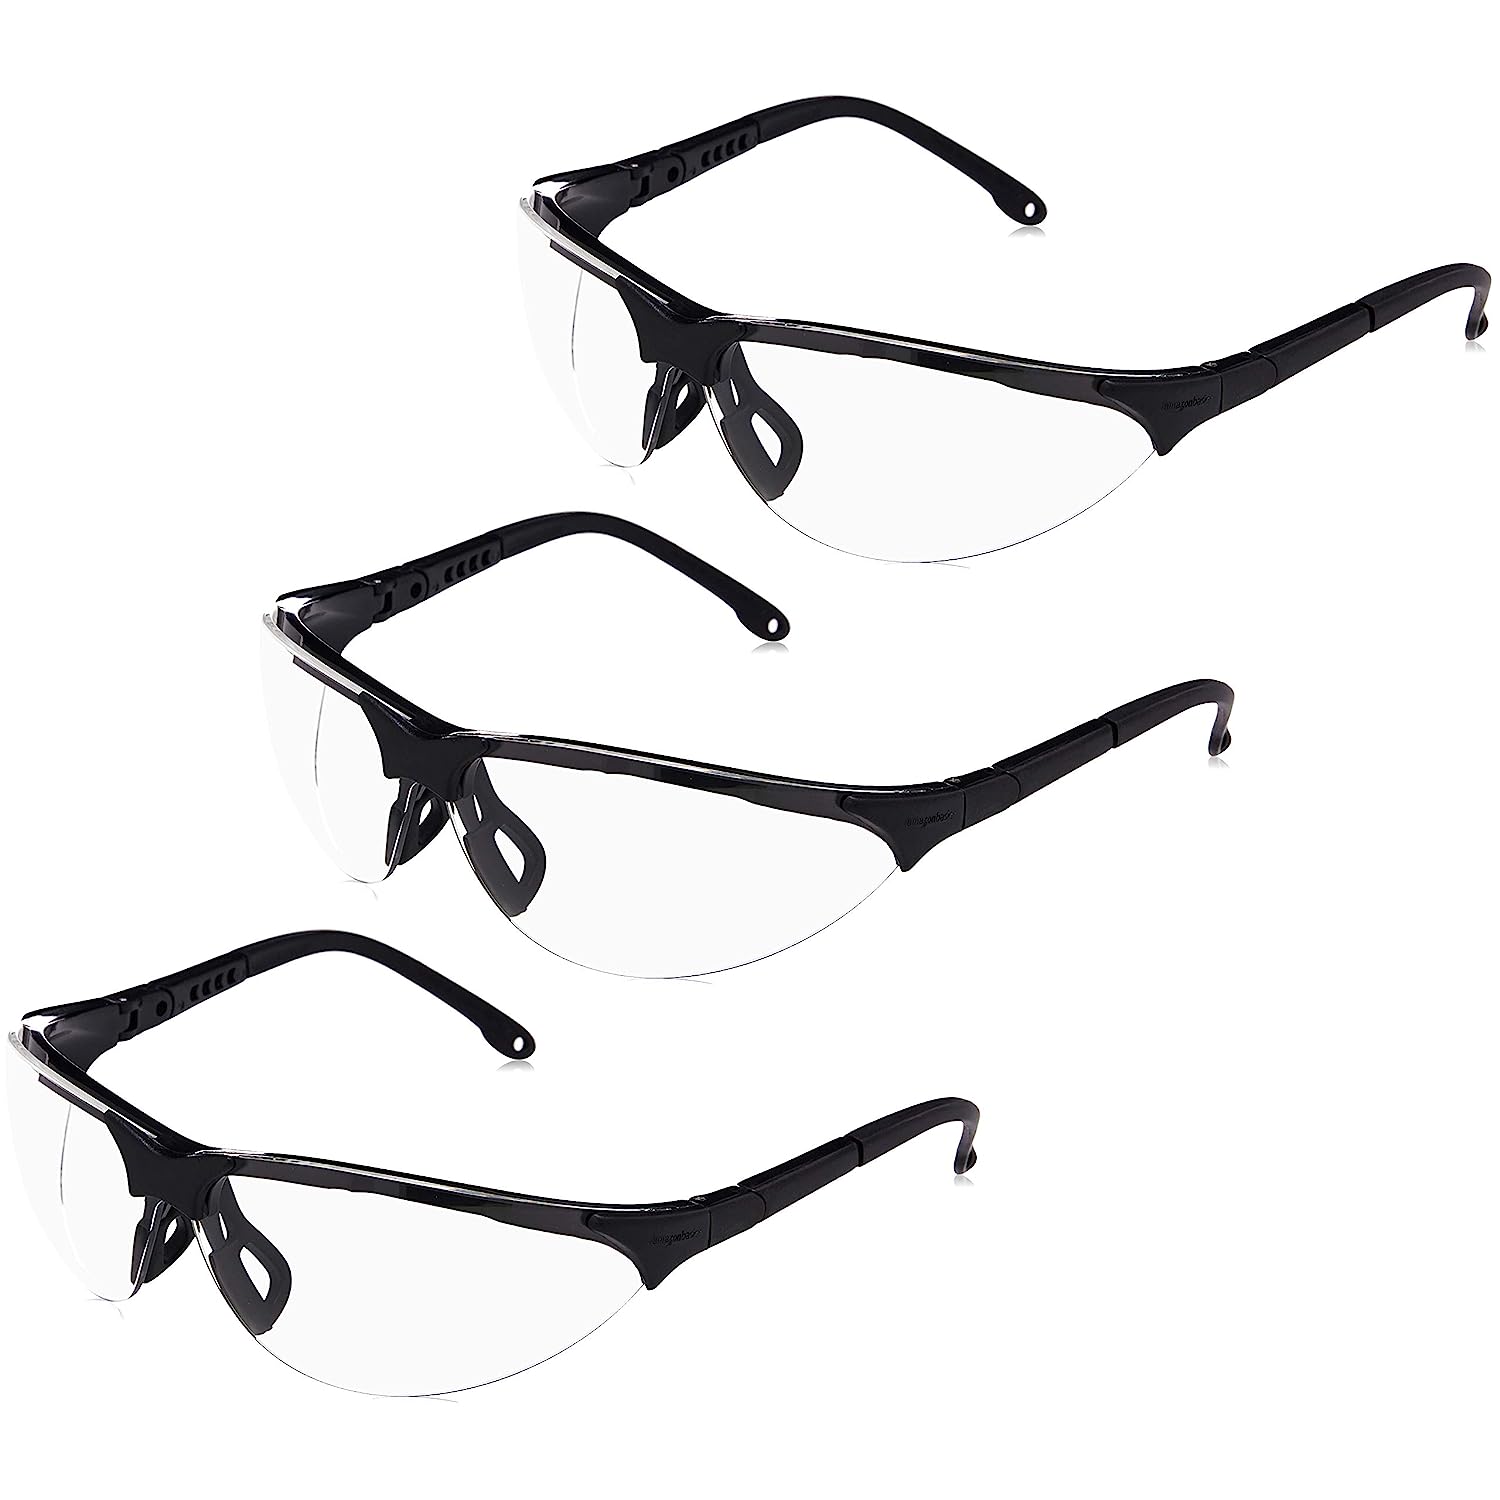 Amazon Basics Anti-Fog Shooting Safety Glasses Eye [...]